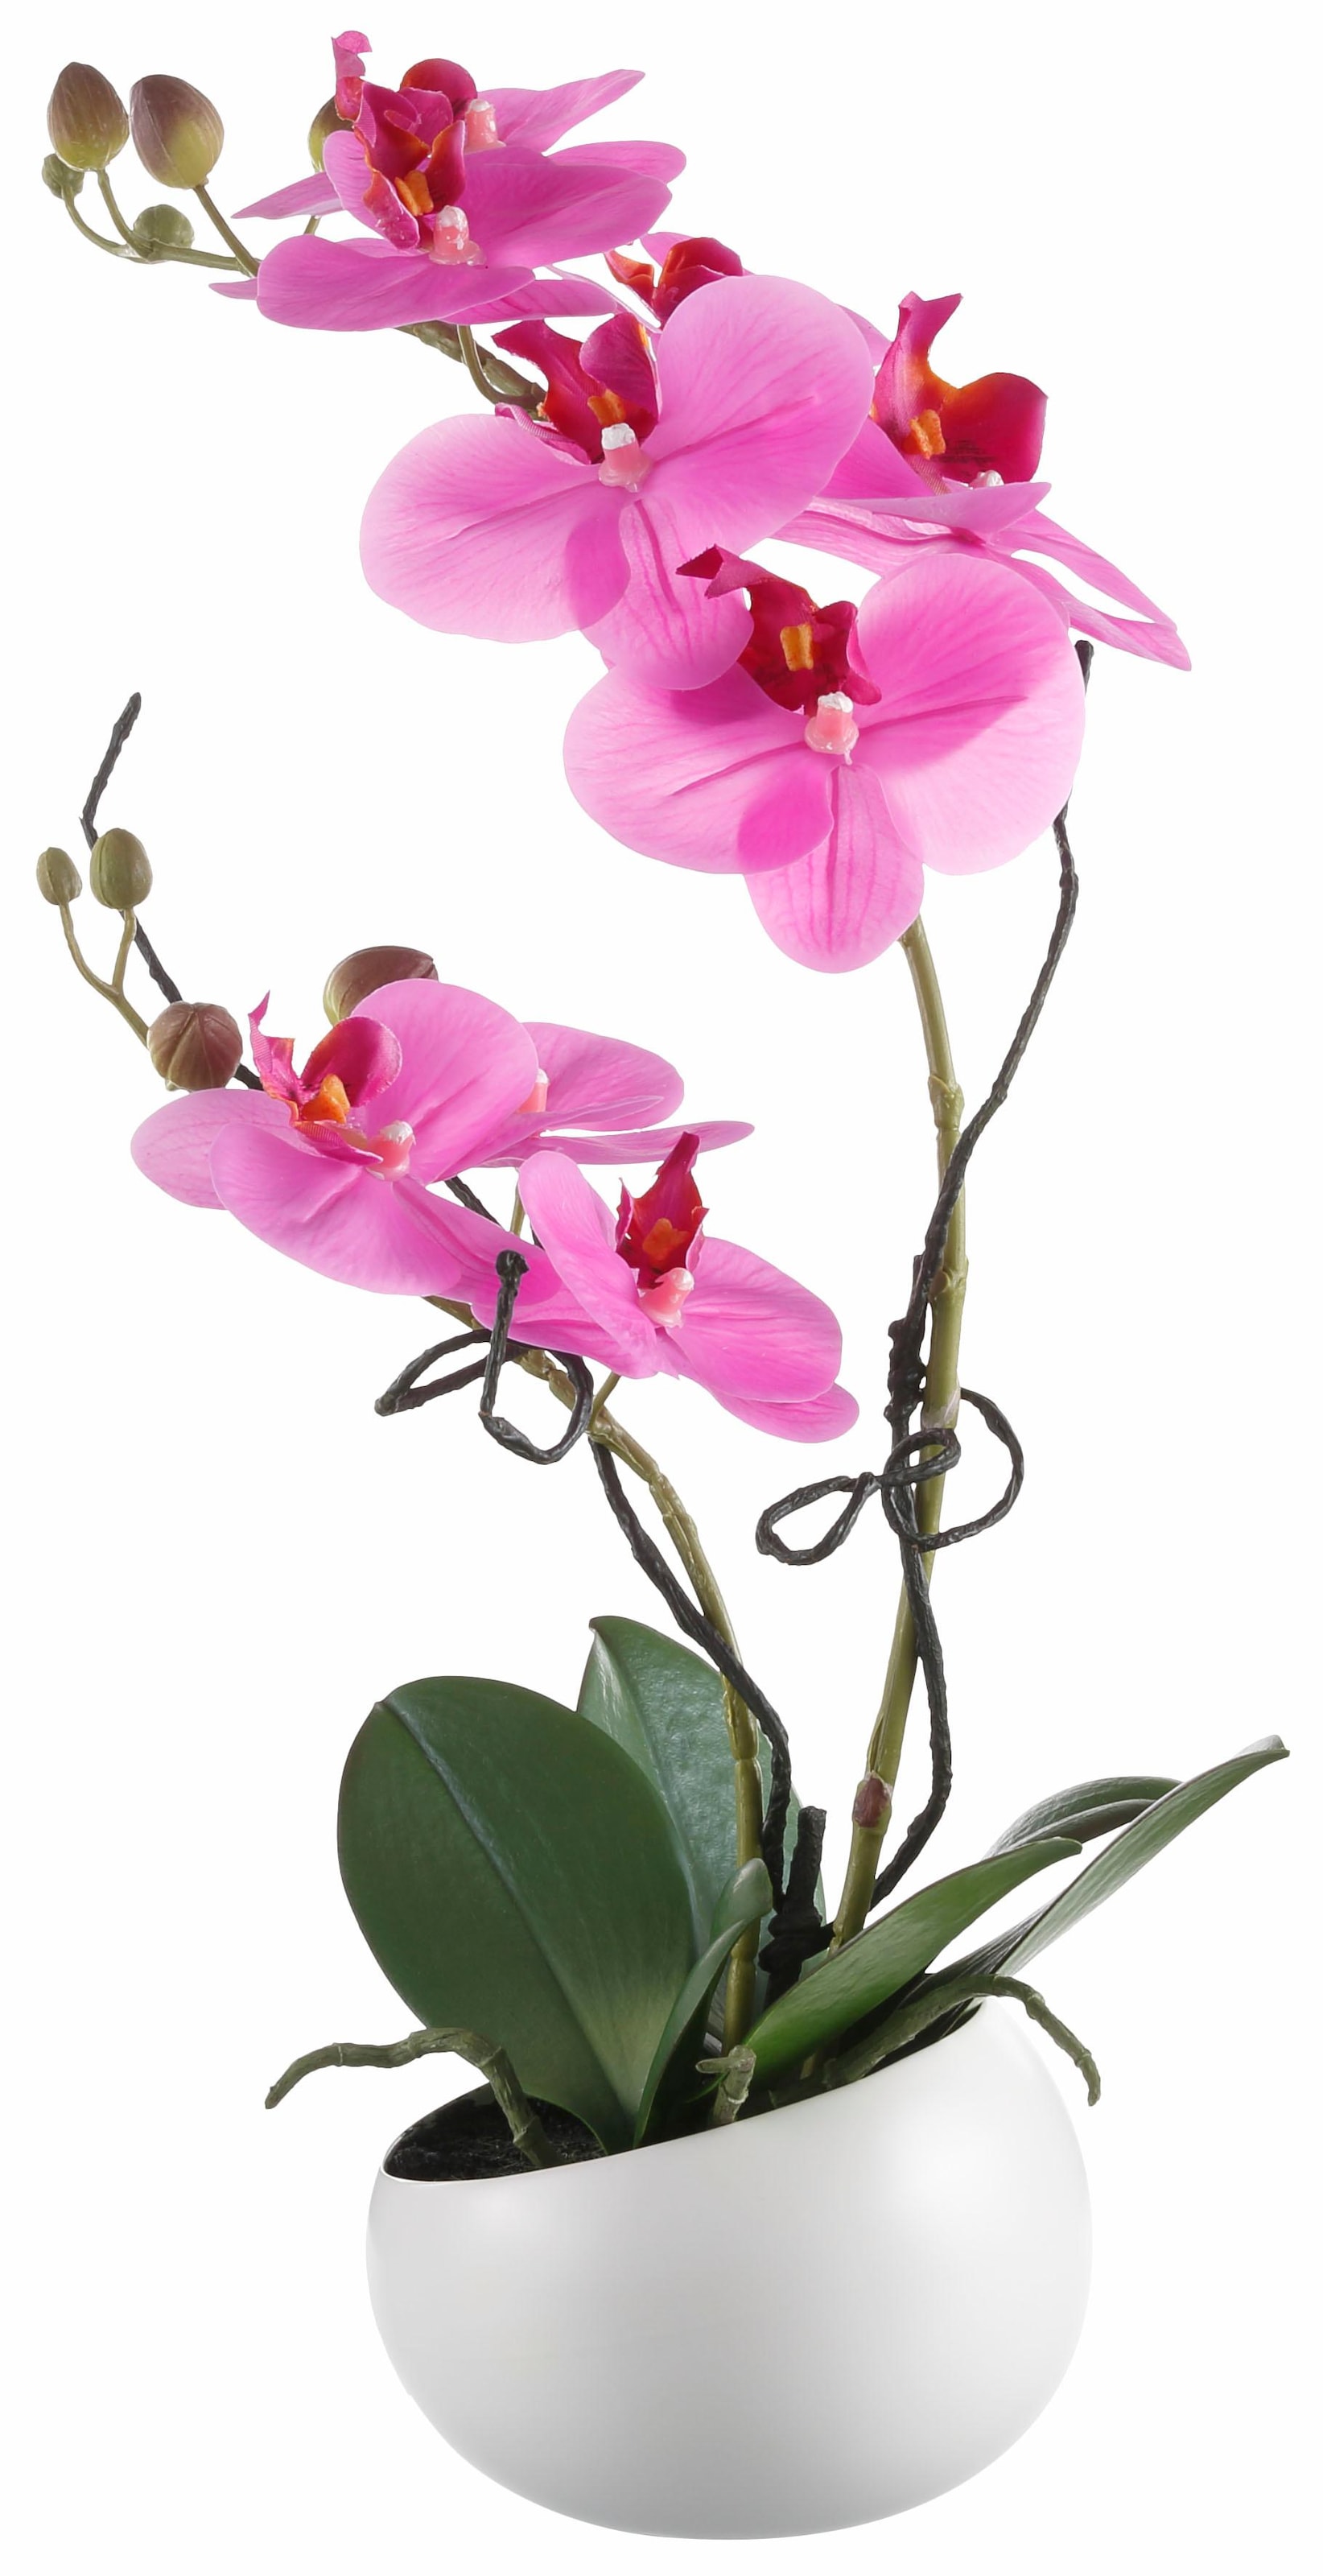 Creativ green Kunstpflanze »Orchidee« kaufen